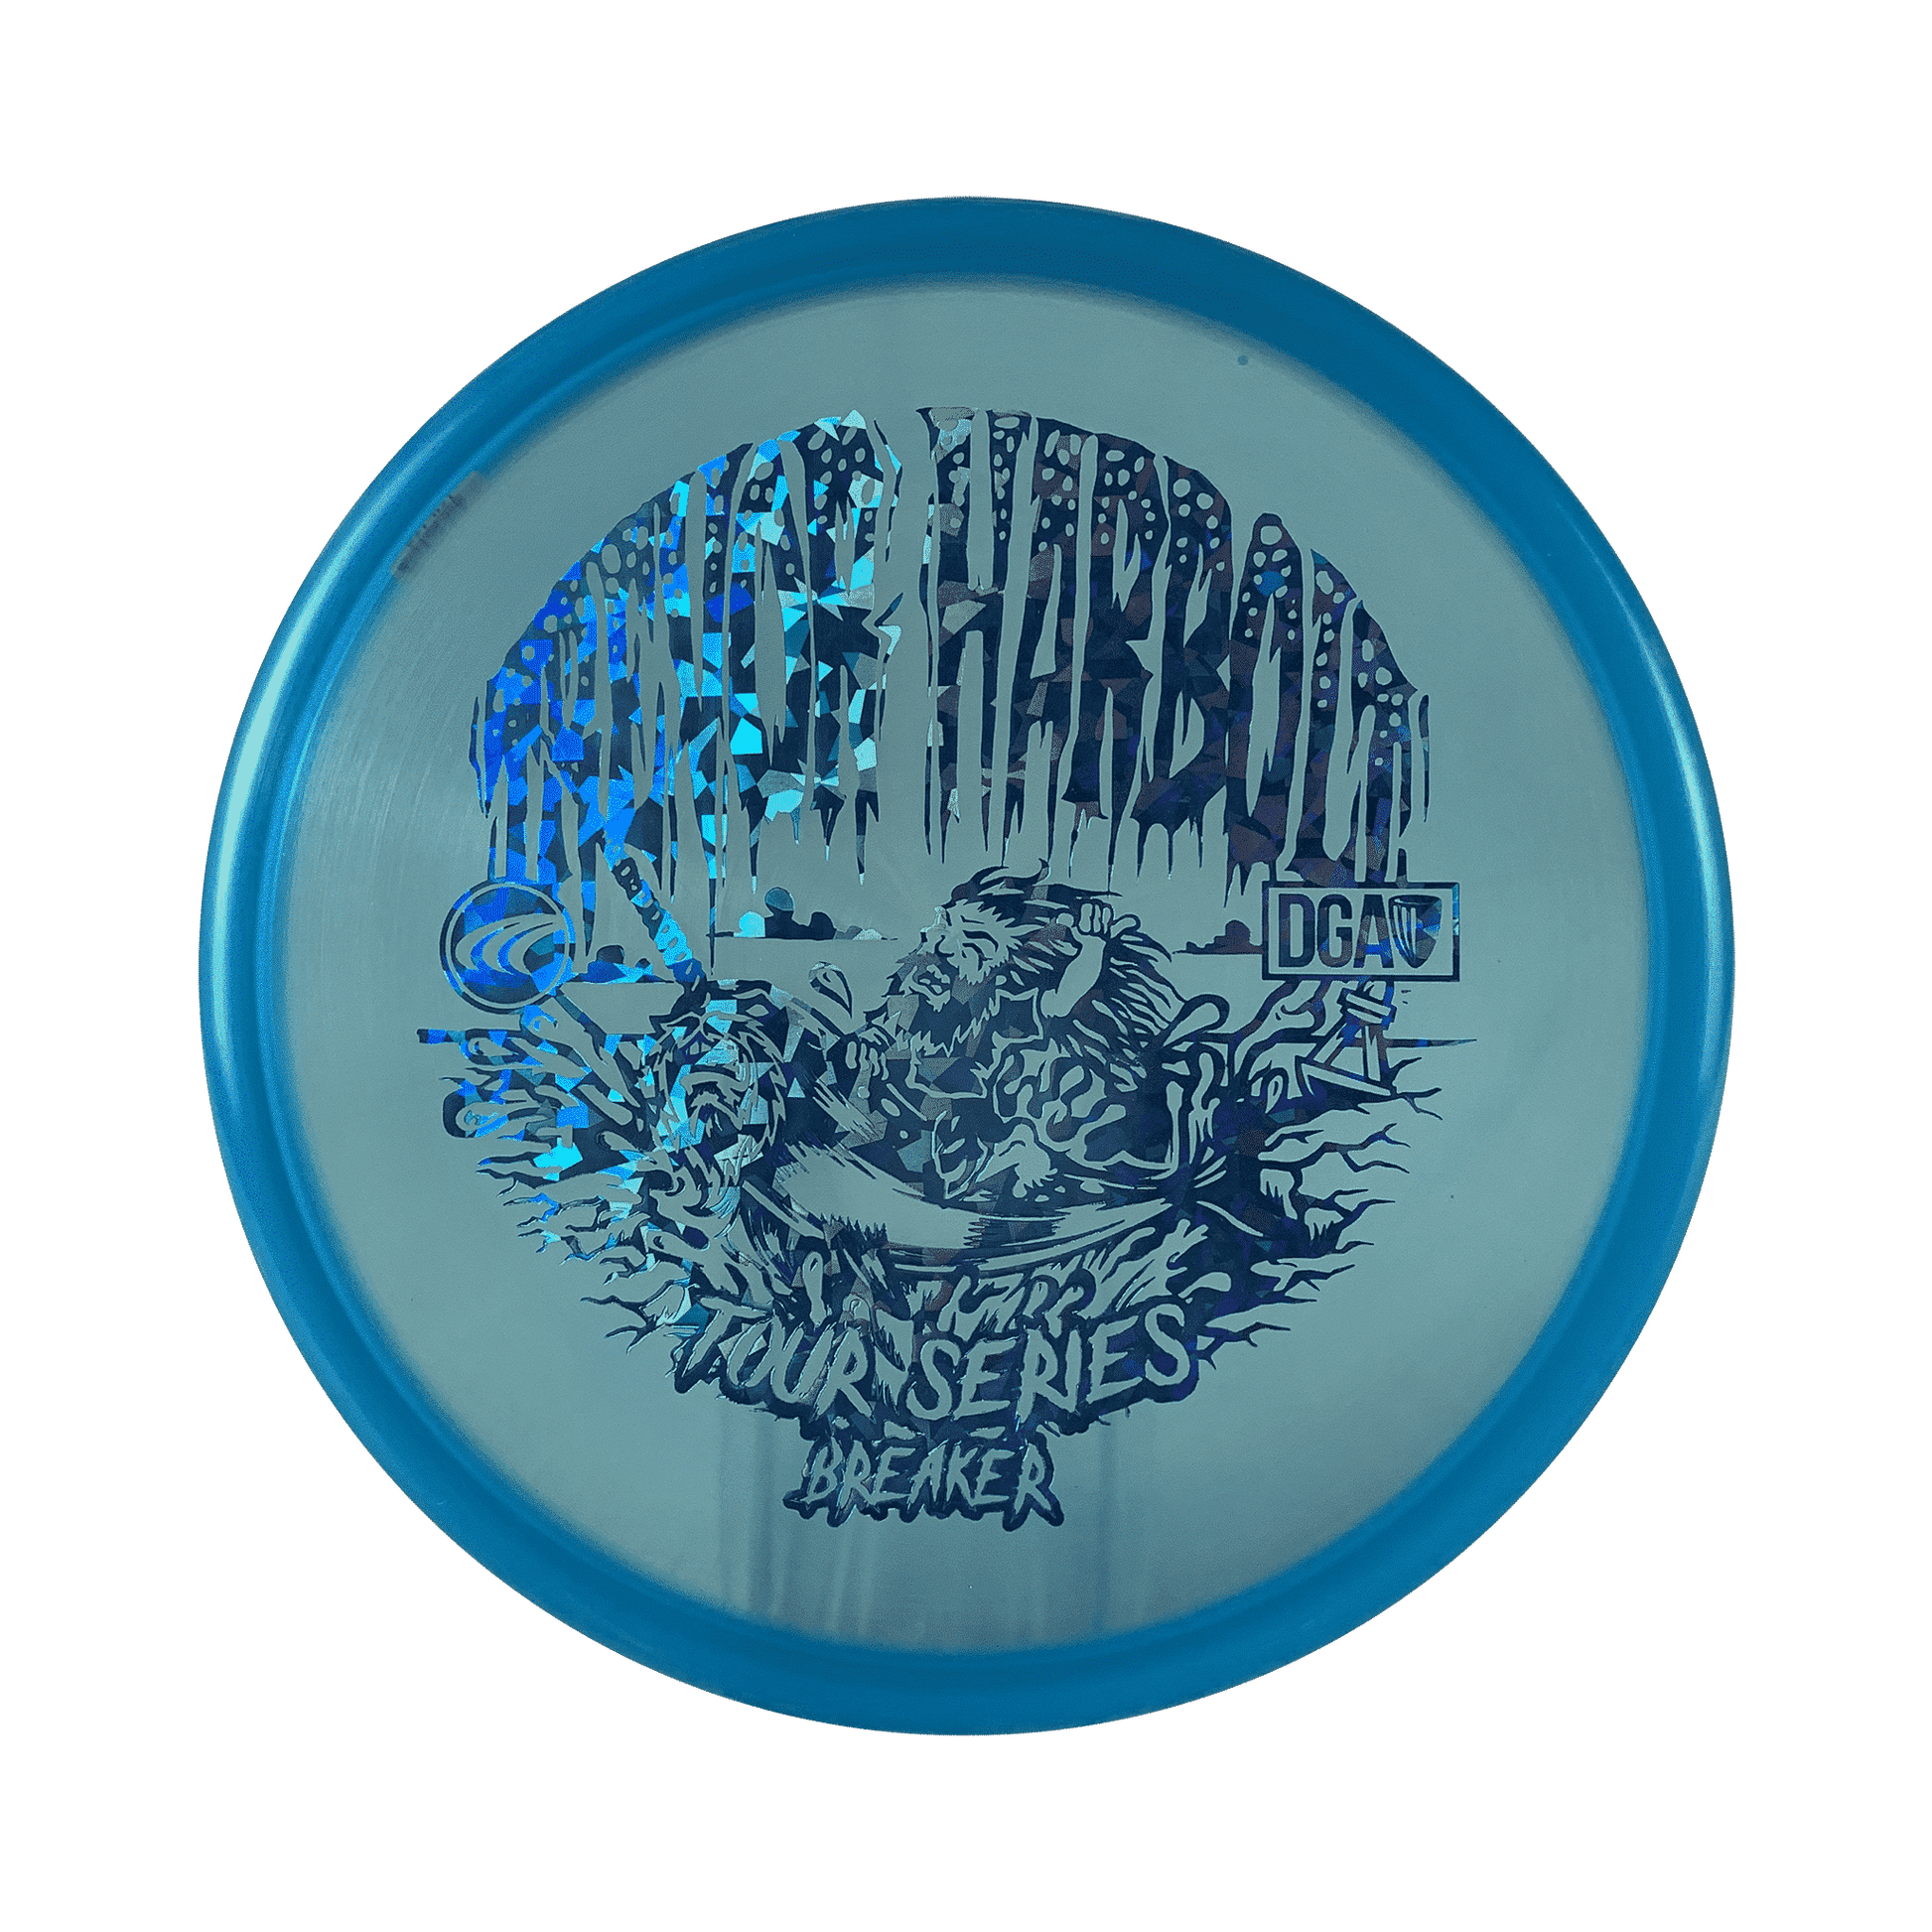 Signature Pro Line Swirl Breaker - Tour Series Disc DGA blue 170 